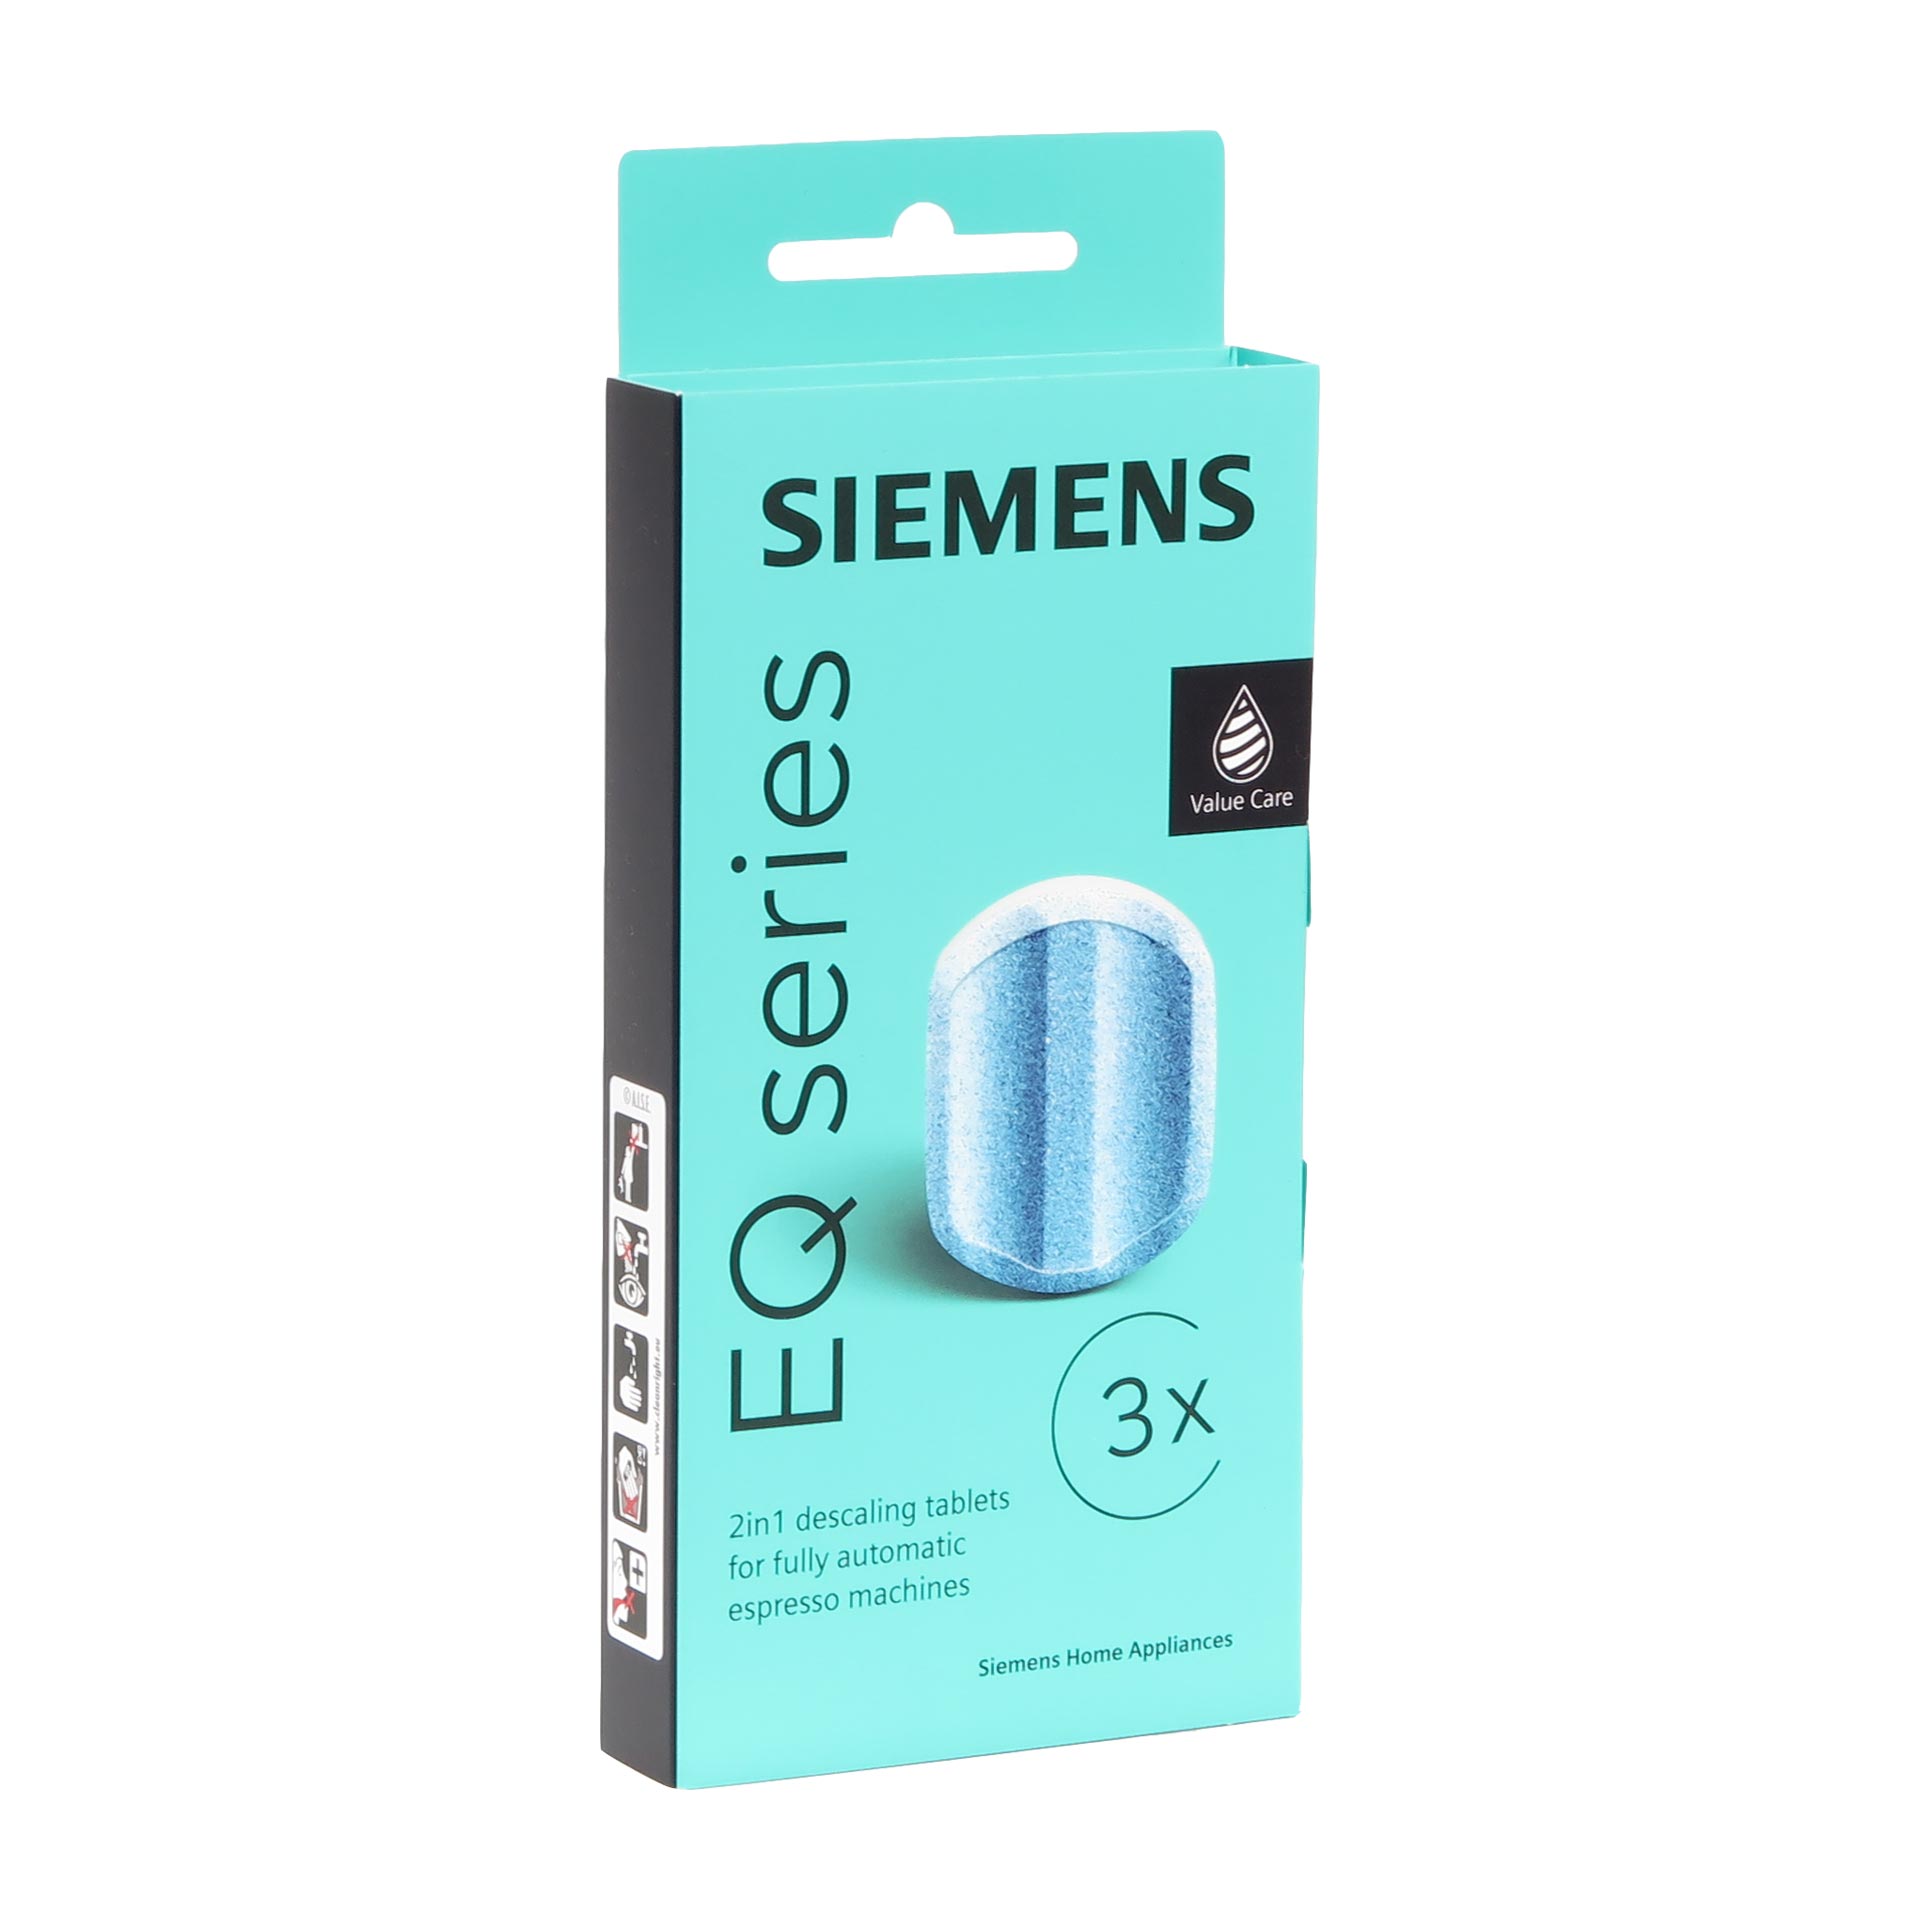 Siemens Entkalker EQ.series TZ80002A, 2in1, Entkalkungstabletten, 3  Tabletten – Böttcher AG